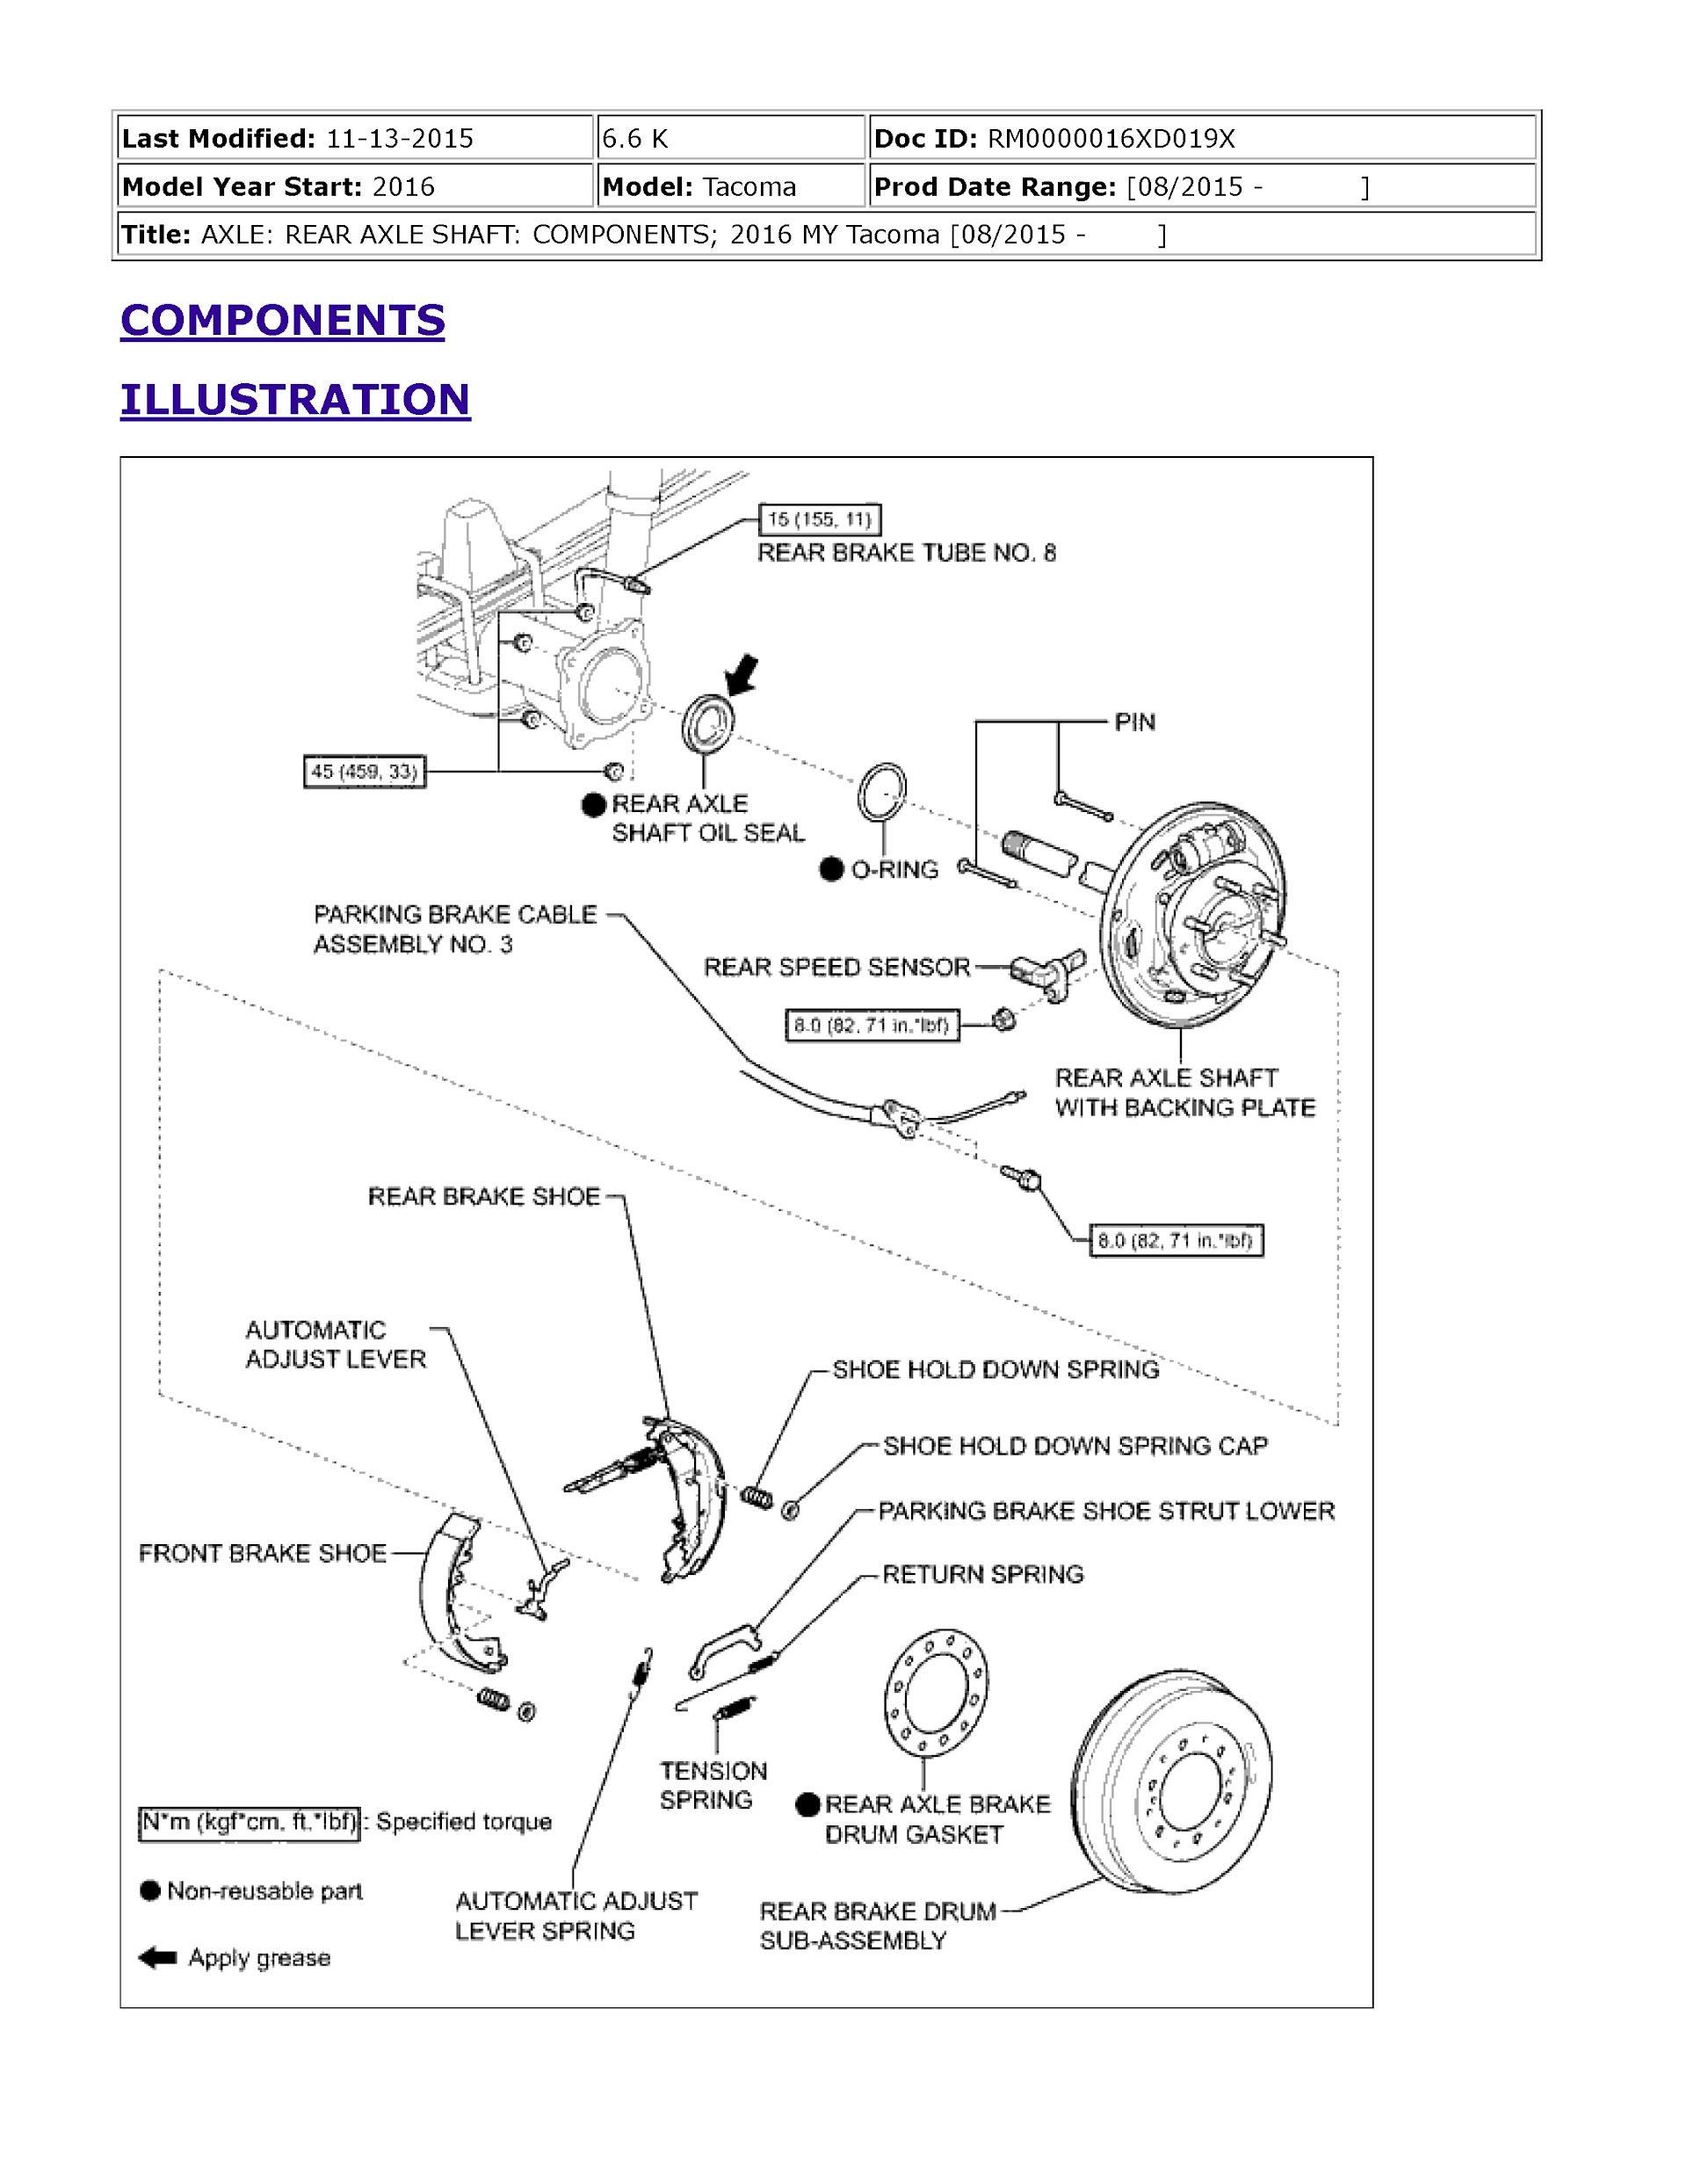 2018 Toyota Tacoma Repair Manual,Rear Axle Shaft